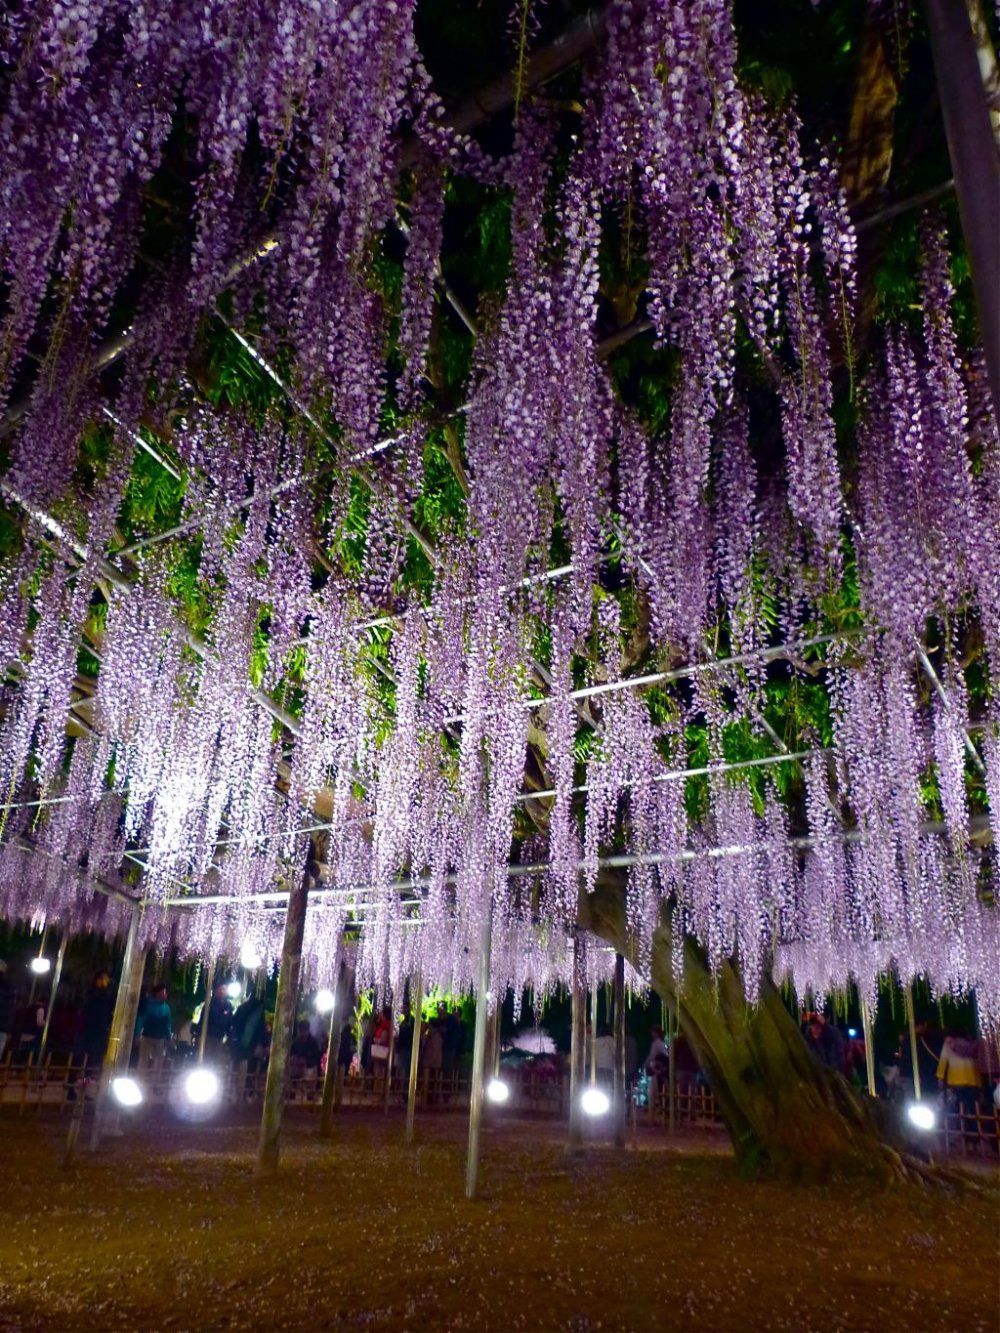 Oh-nagafuji wisteria at night